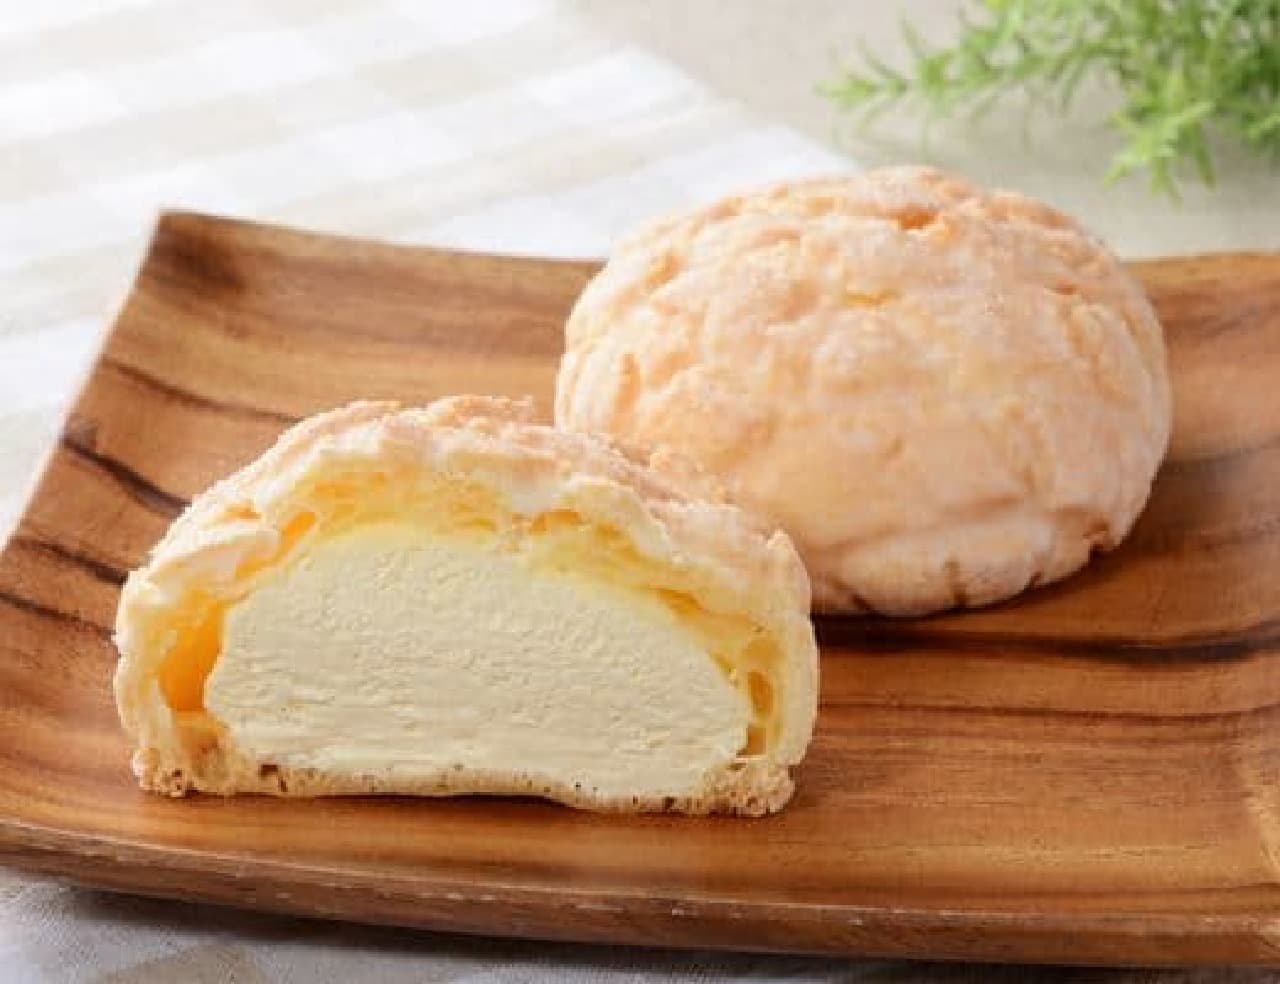 Cream puffs that look like melon bread